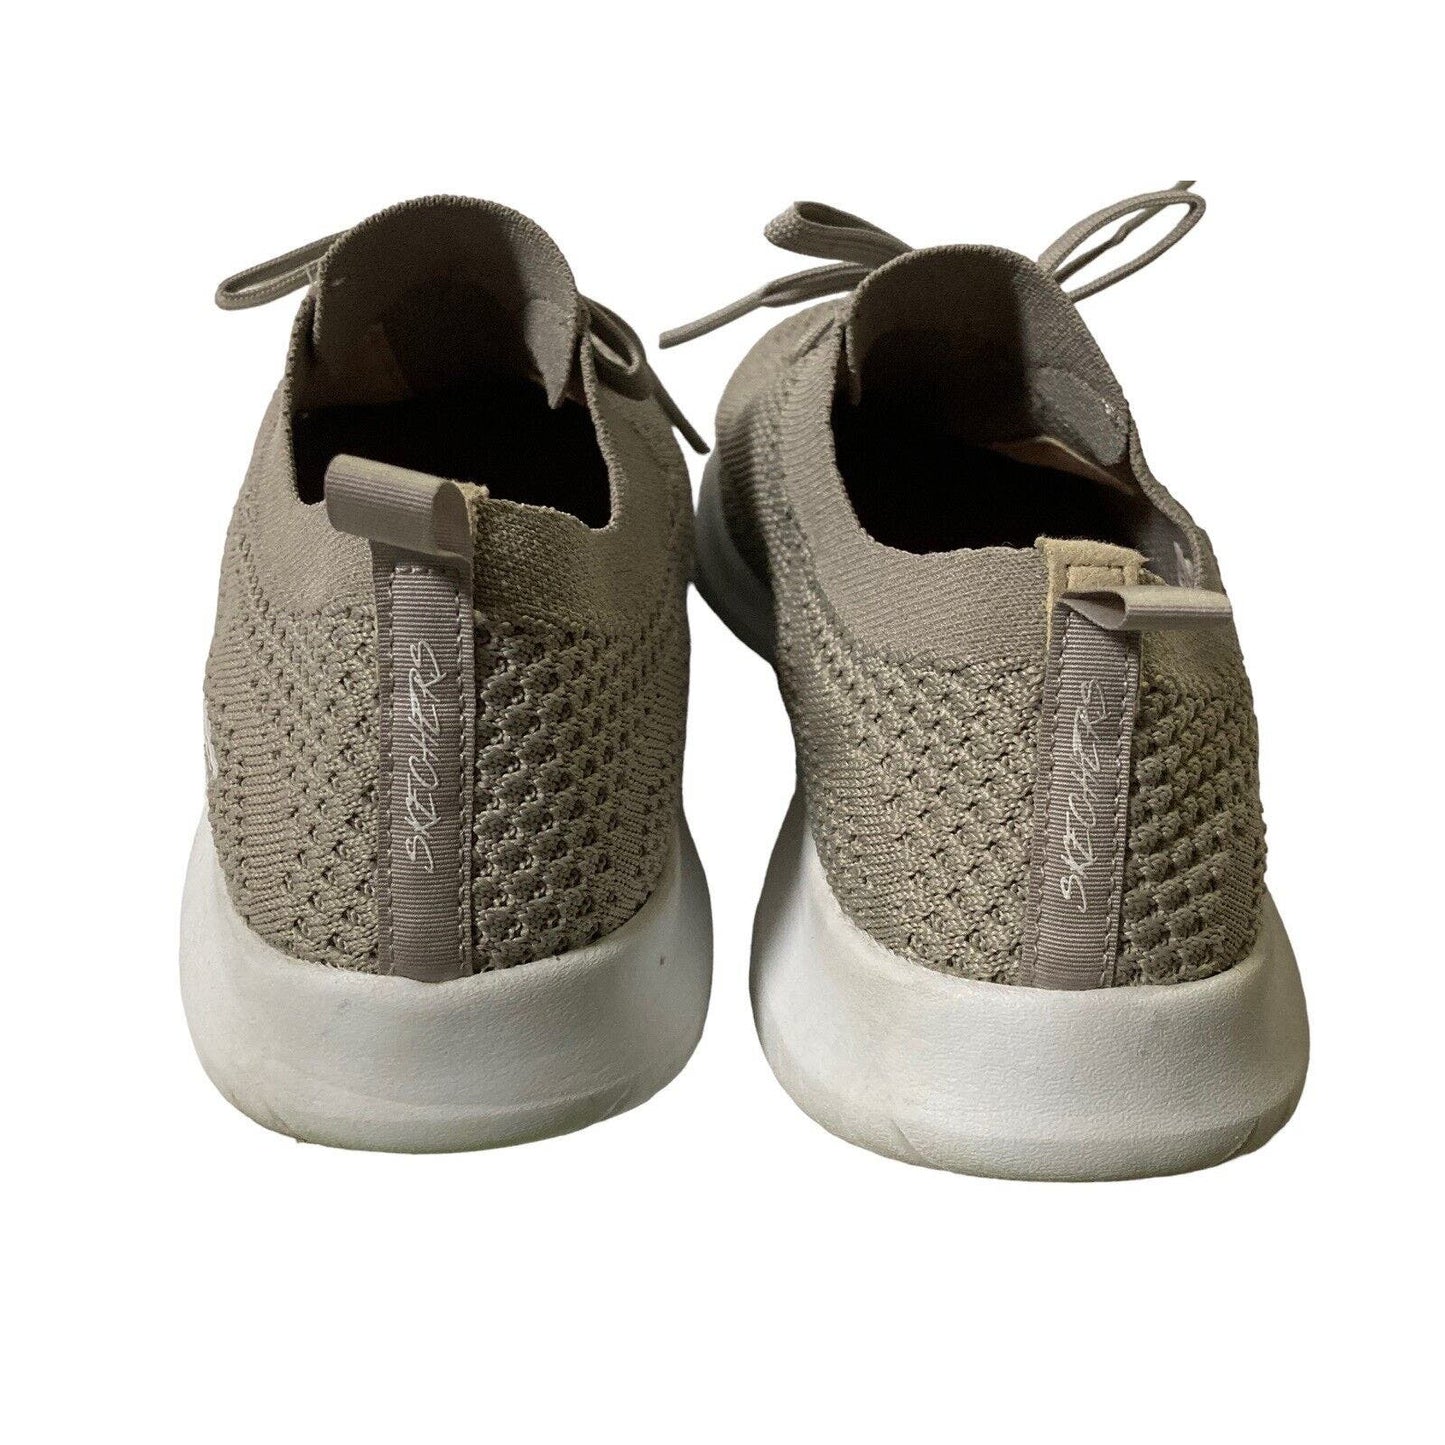 Skechers Ultra Flex 3.0 - Big Plan Taupe Sneakers Size 7.5